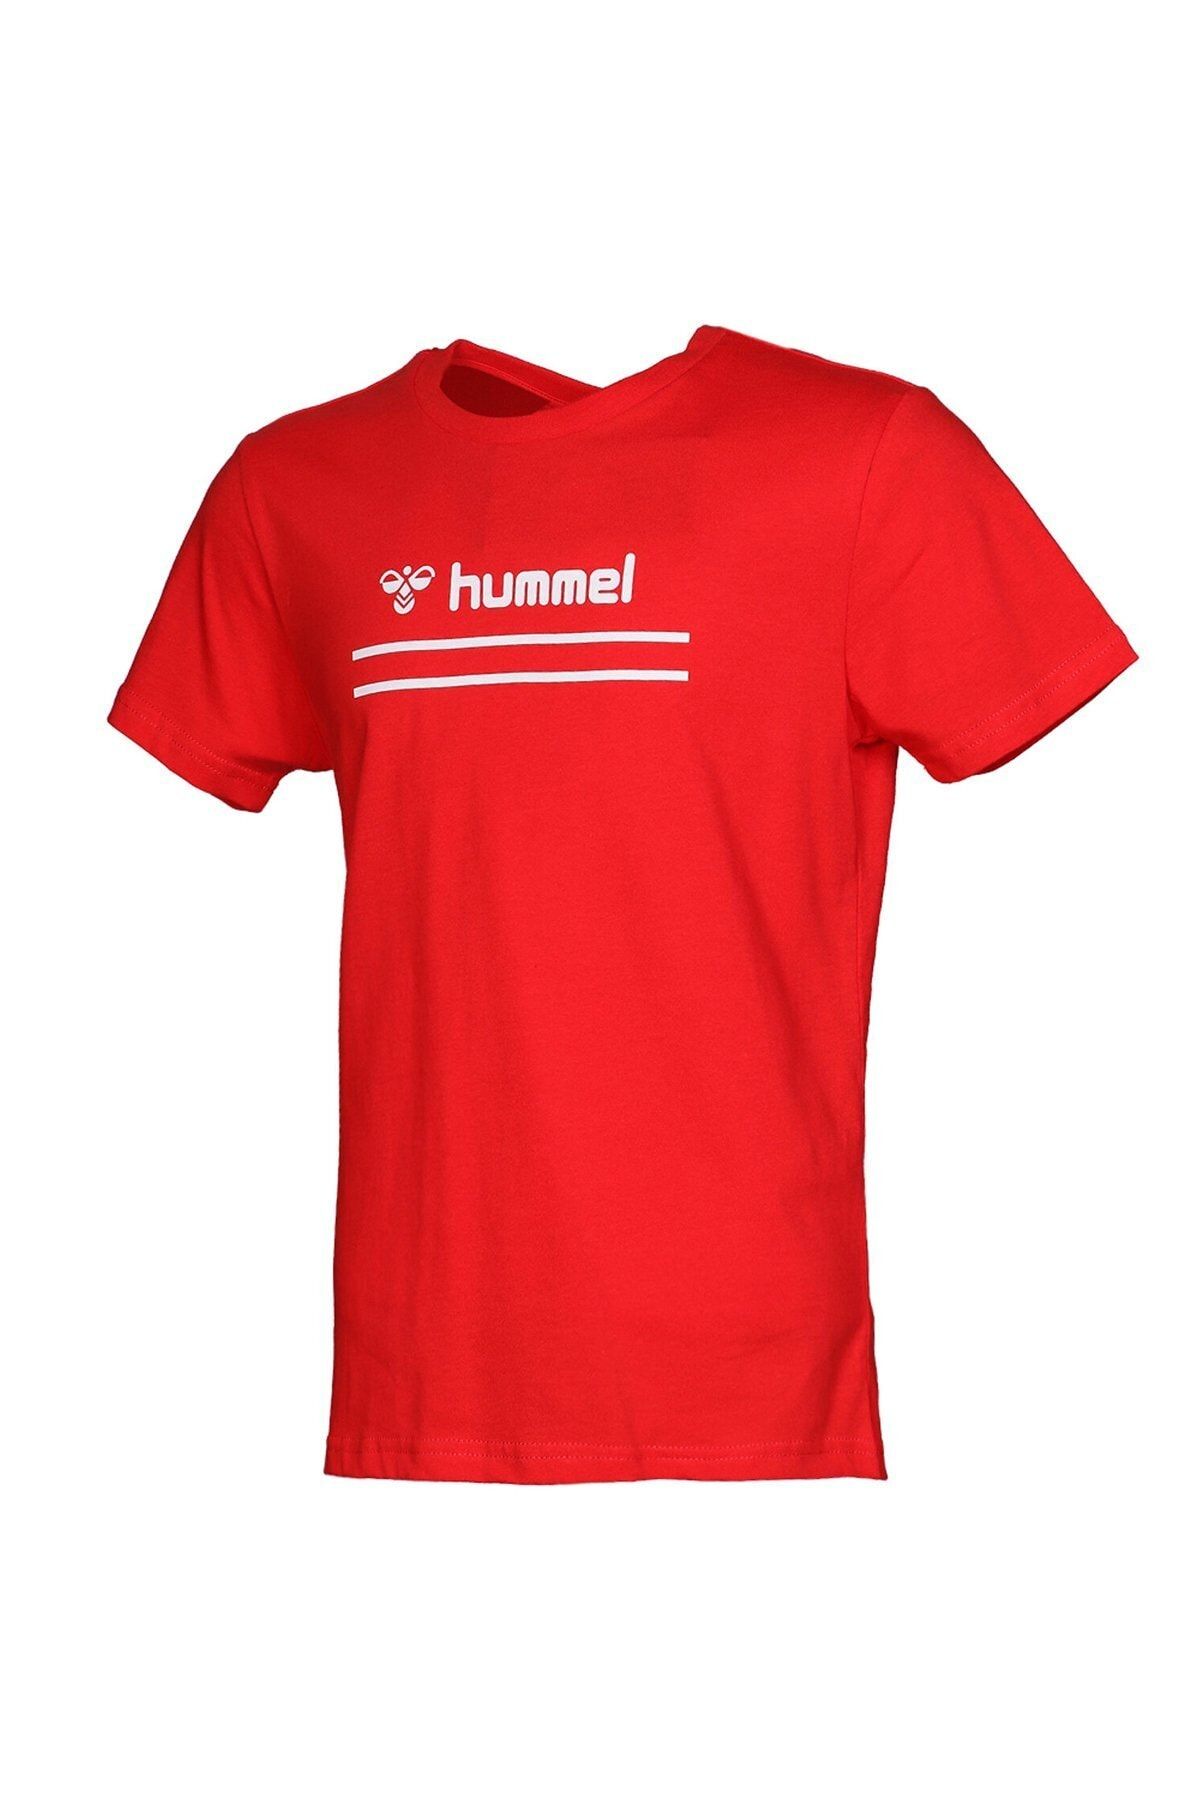 hummel Kız Çocuk Kırmızı Kısa Kollu T-Shirt